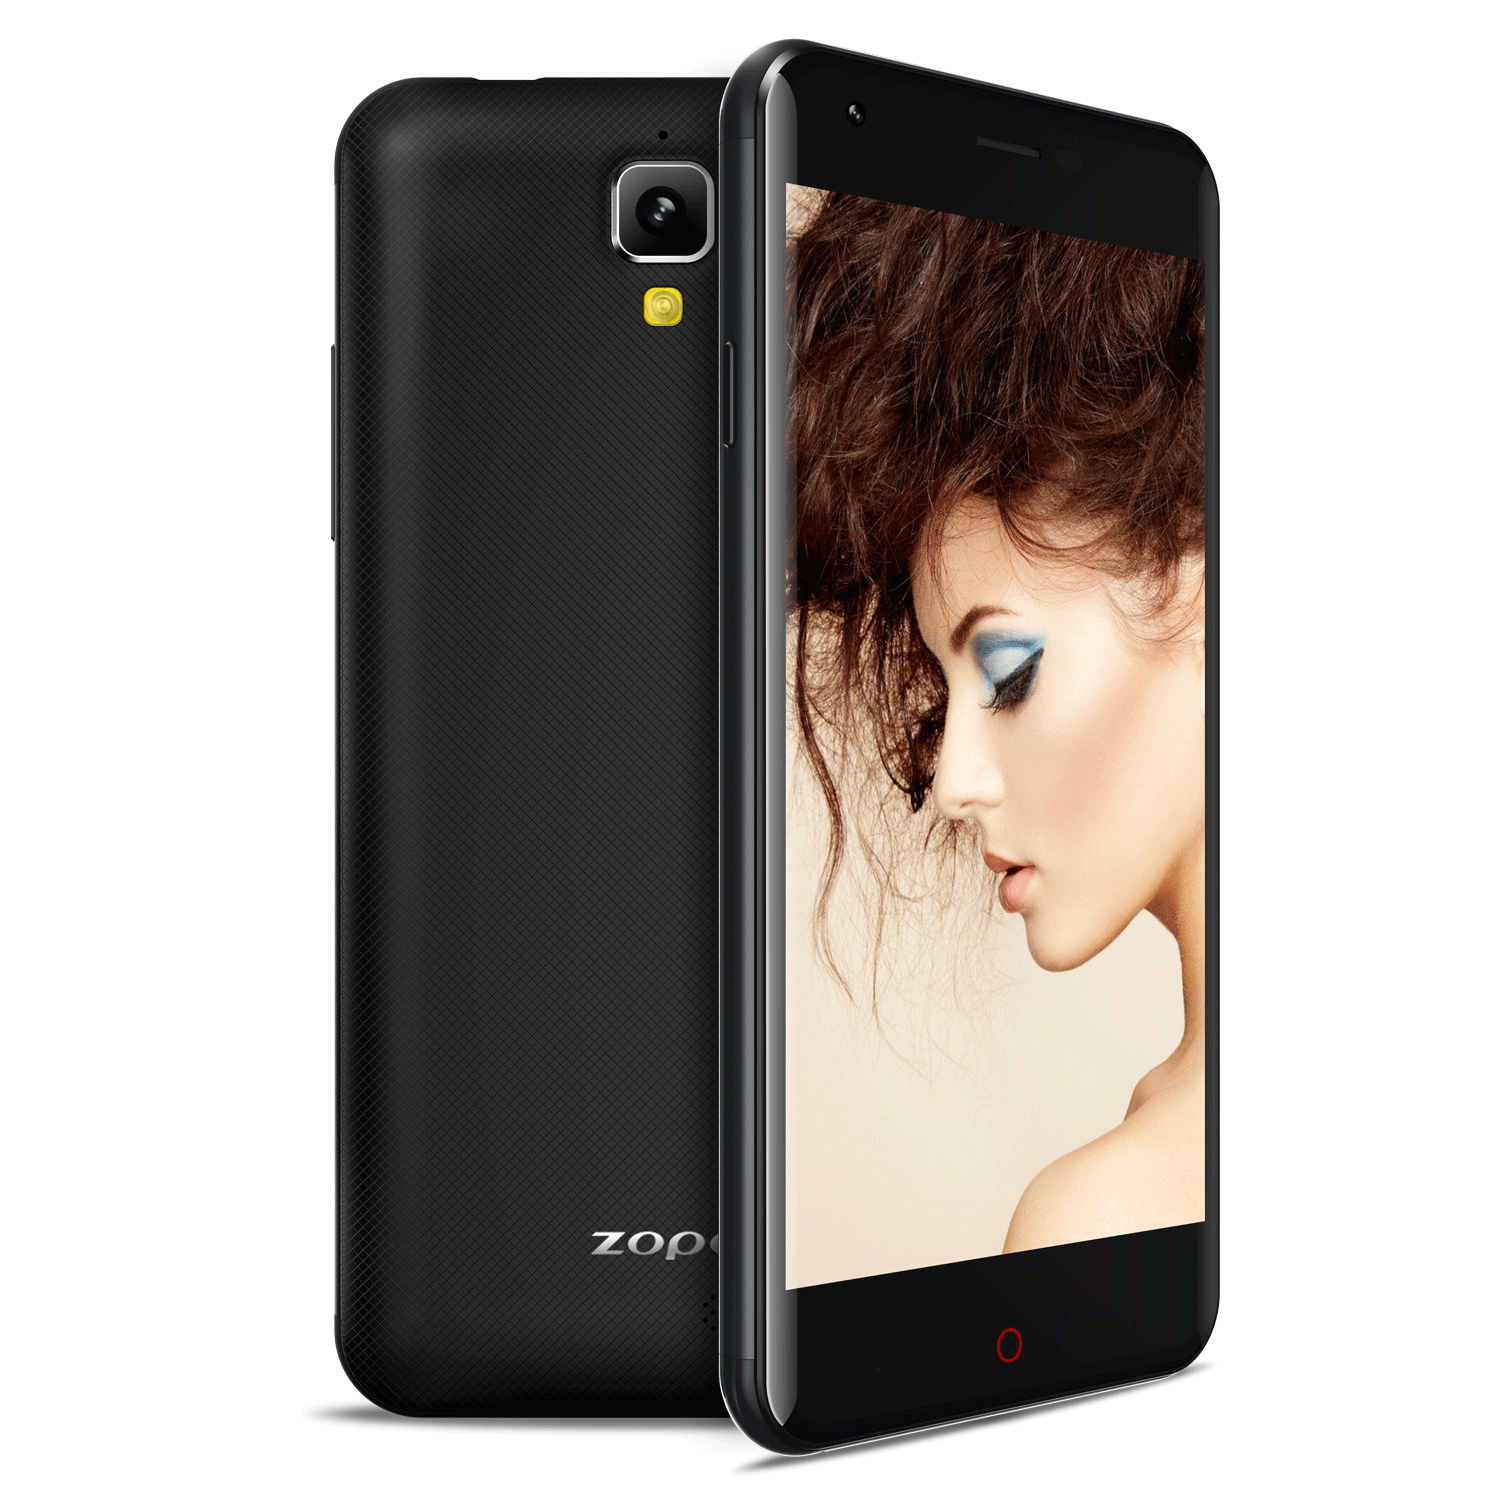 ZOPO ZP530 Smartphone 4G 64bit Quad Core 1.5GHz 5.0 Inch HD Screen Android 4.4- Black